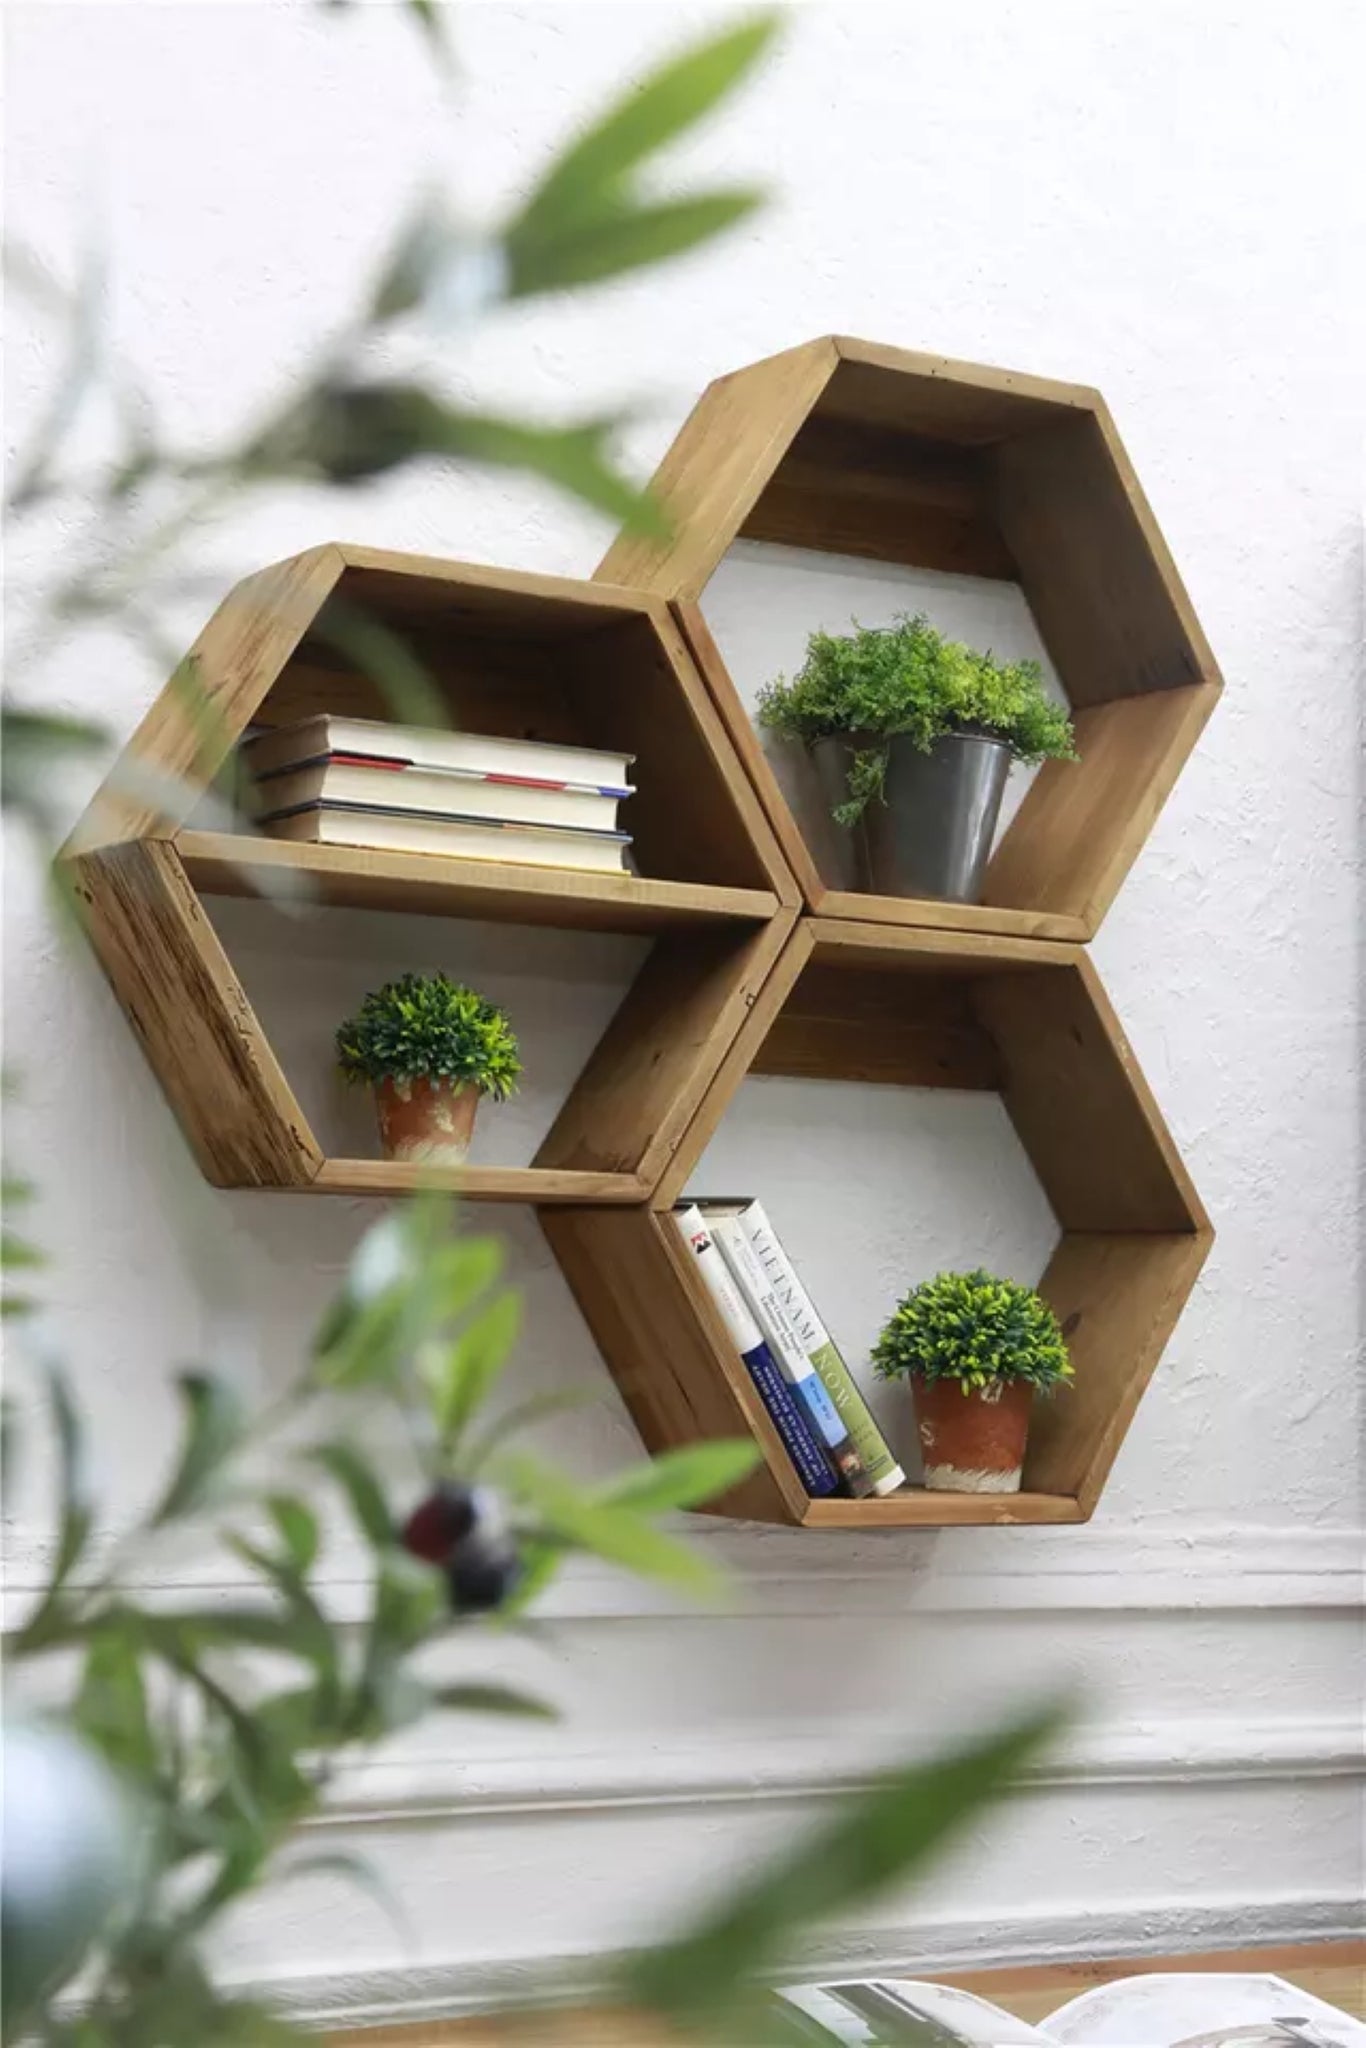 Reclaimed Wooden Hexagon Shelf With Divider